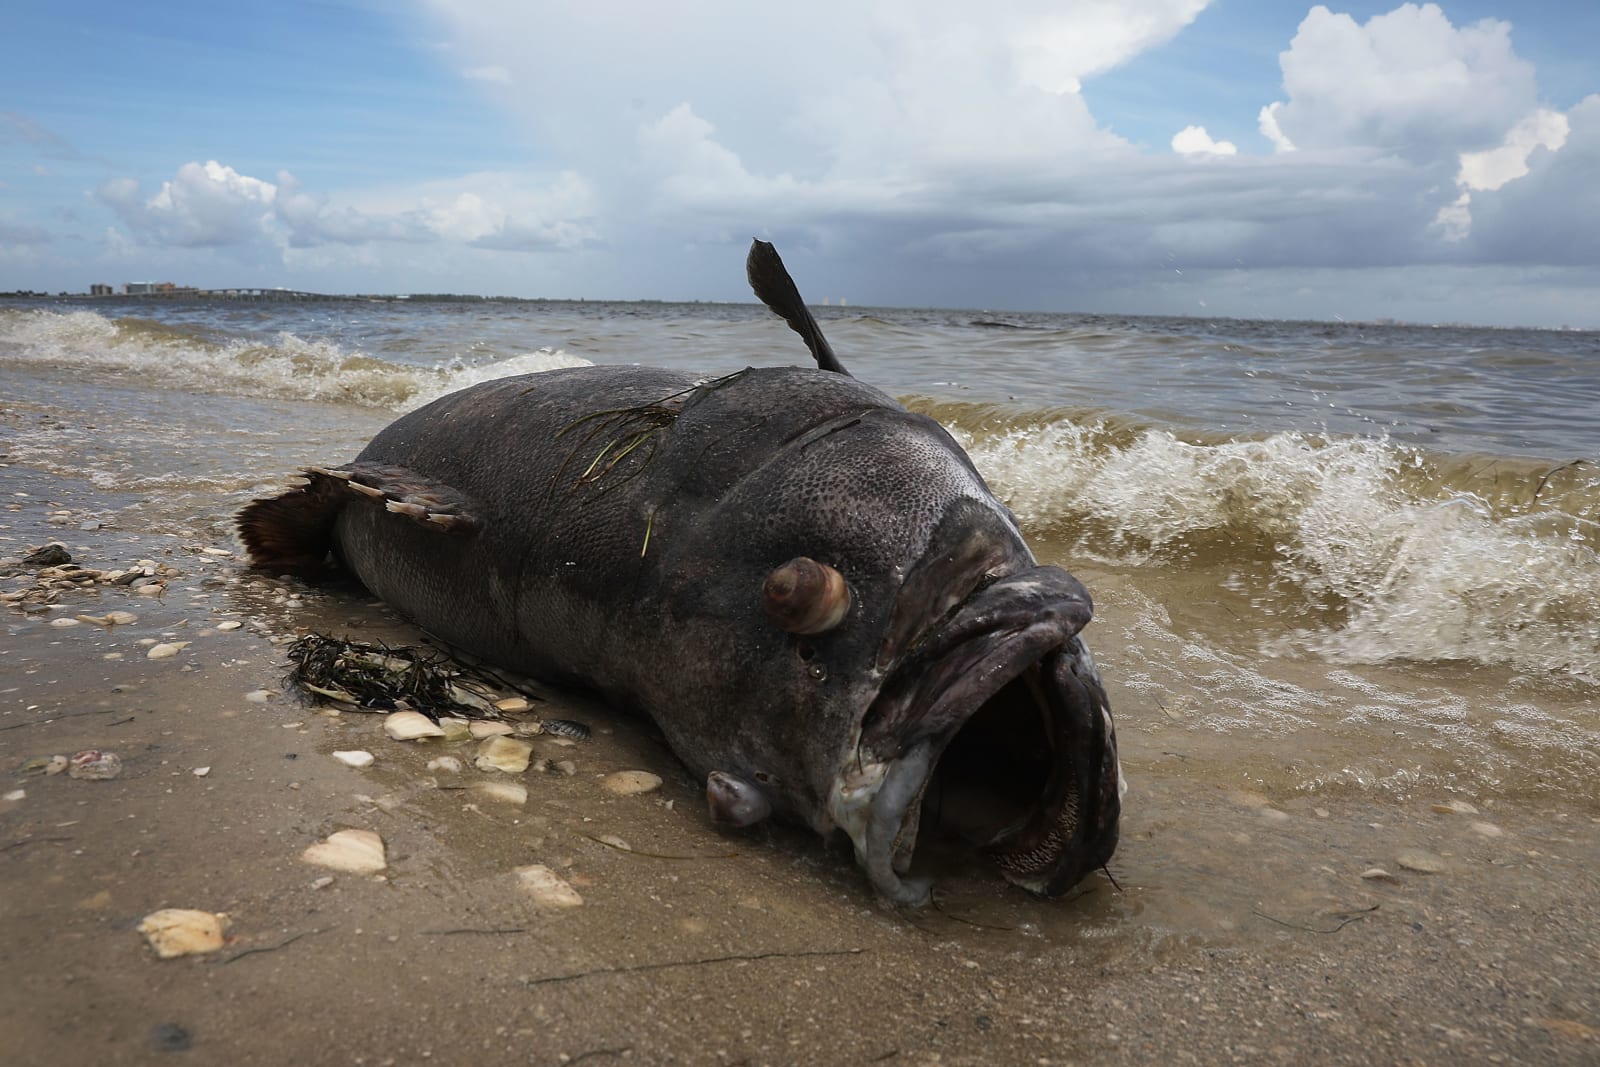 Toxic Red Tide On Florida's Southwest Coast Killing Hundreds Of Turtles And Fish